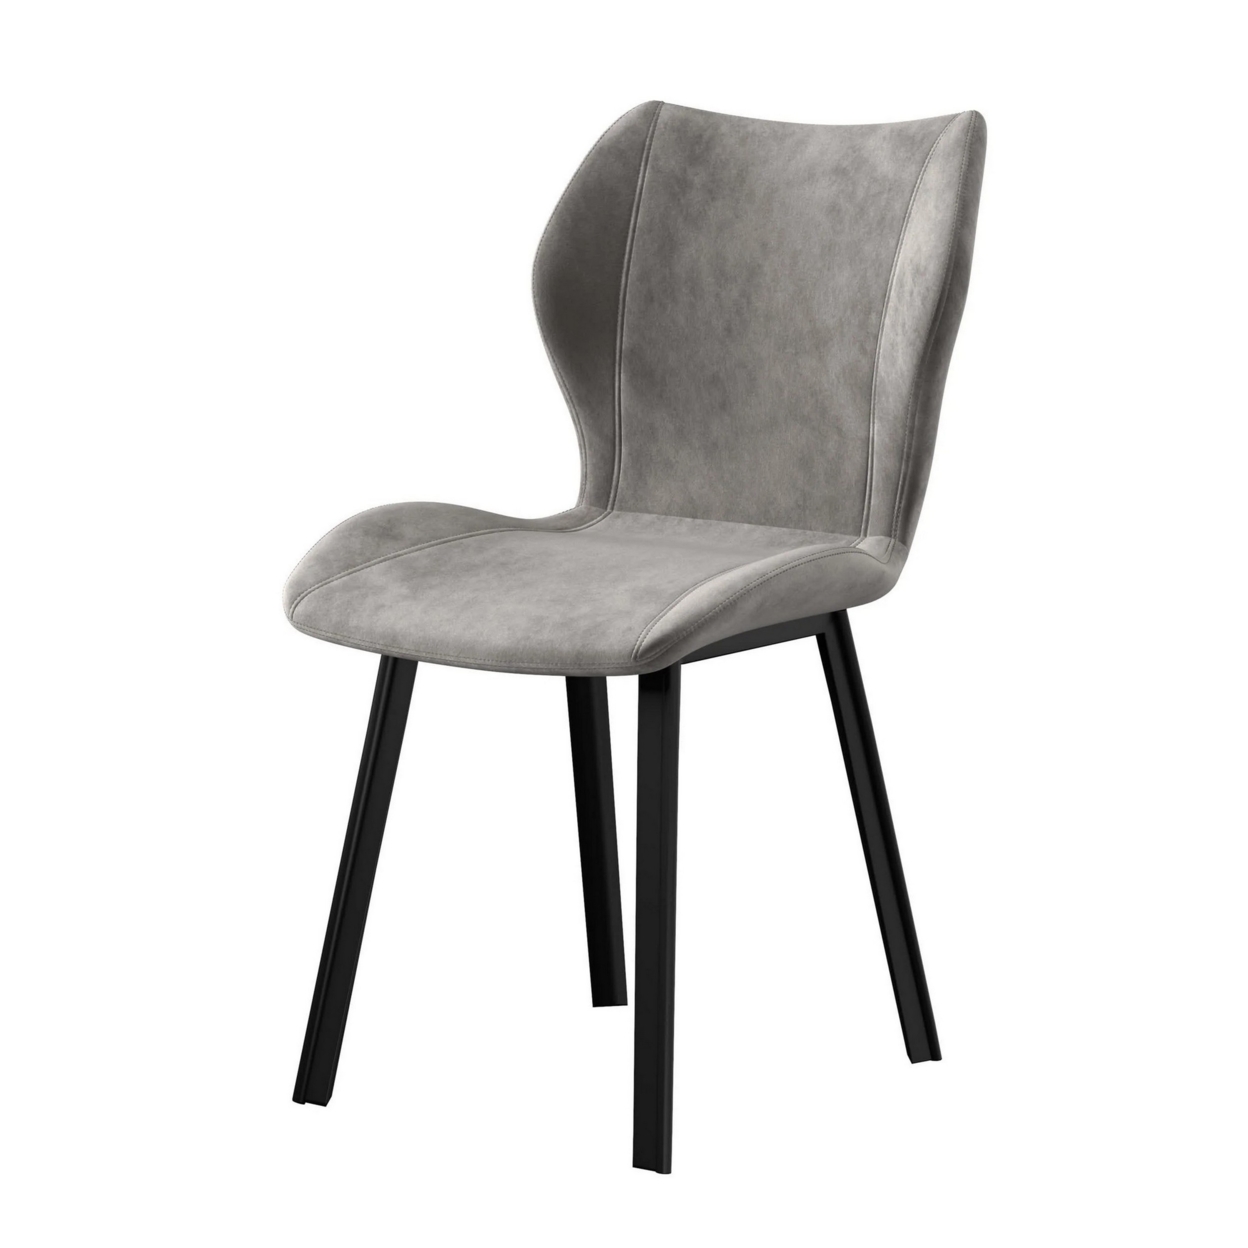 Tomas 19 Inch Wingback Dining Chair, Gray Fabric Upholstery, Black Legs- Saltoro Sherpi